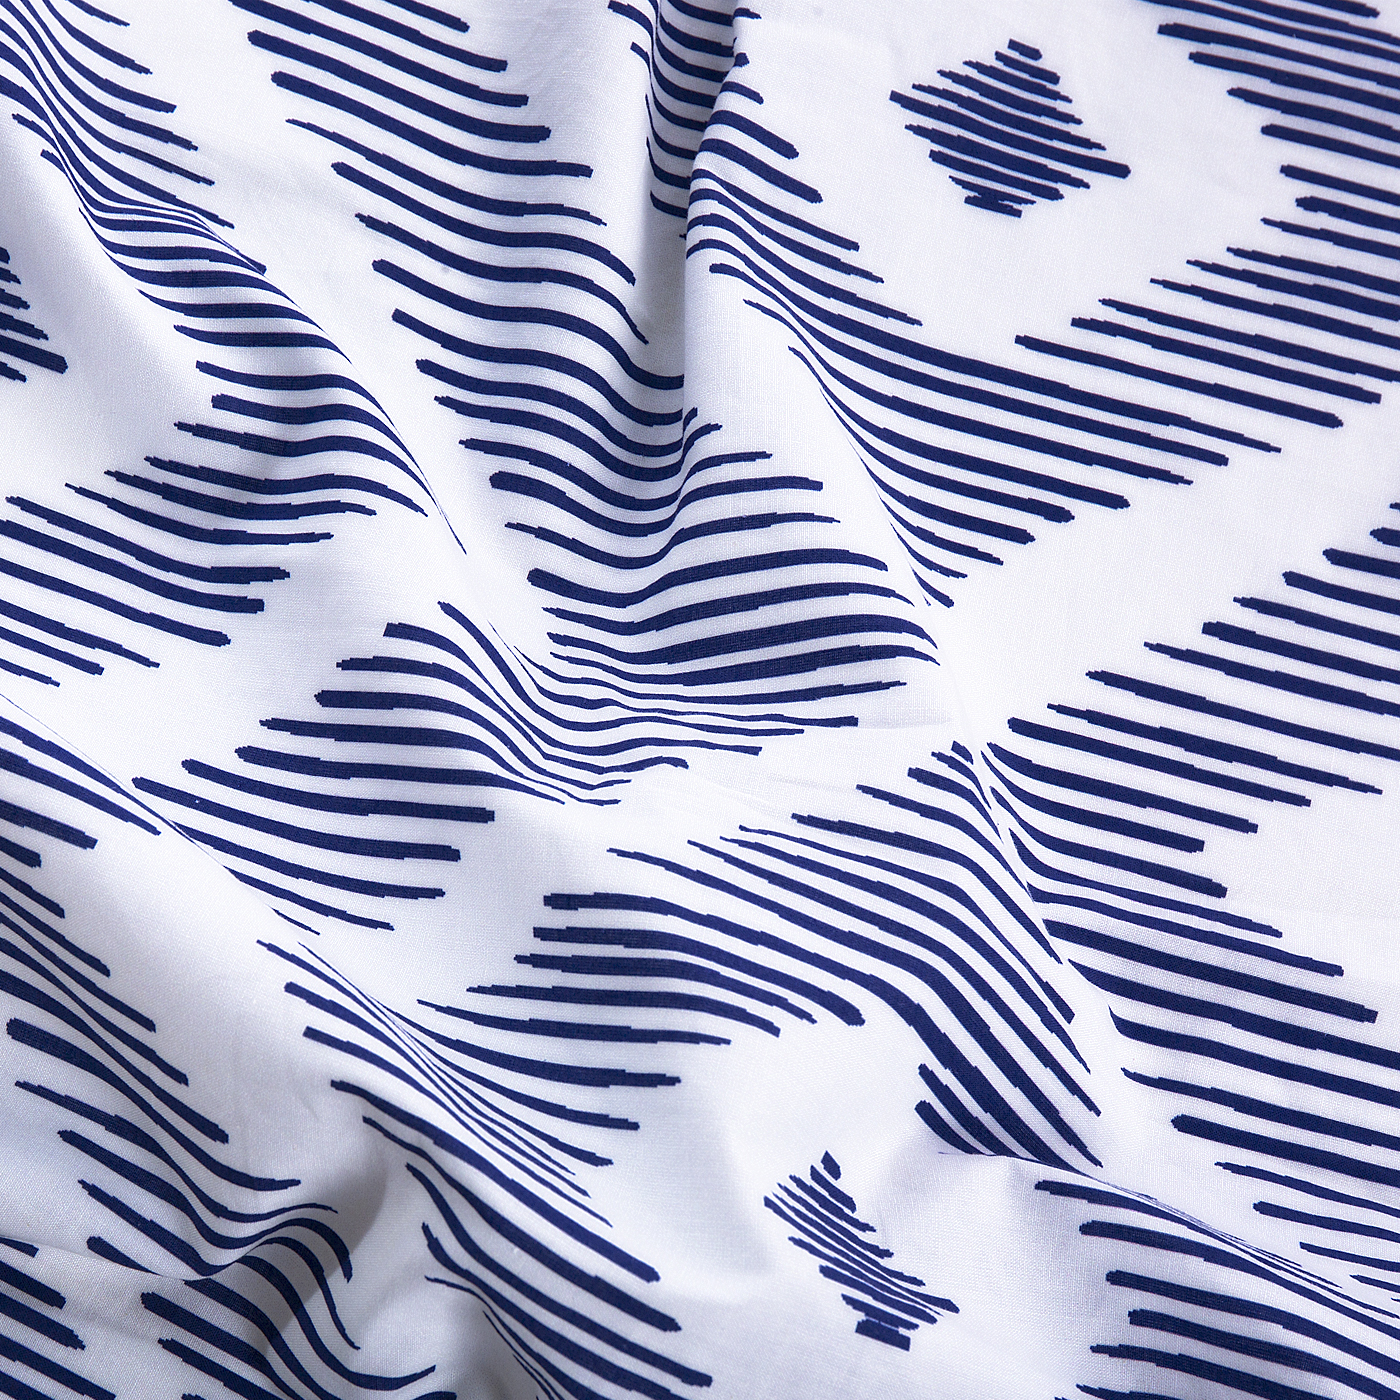 Geometric Patterned Blue Bed Sheet